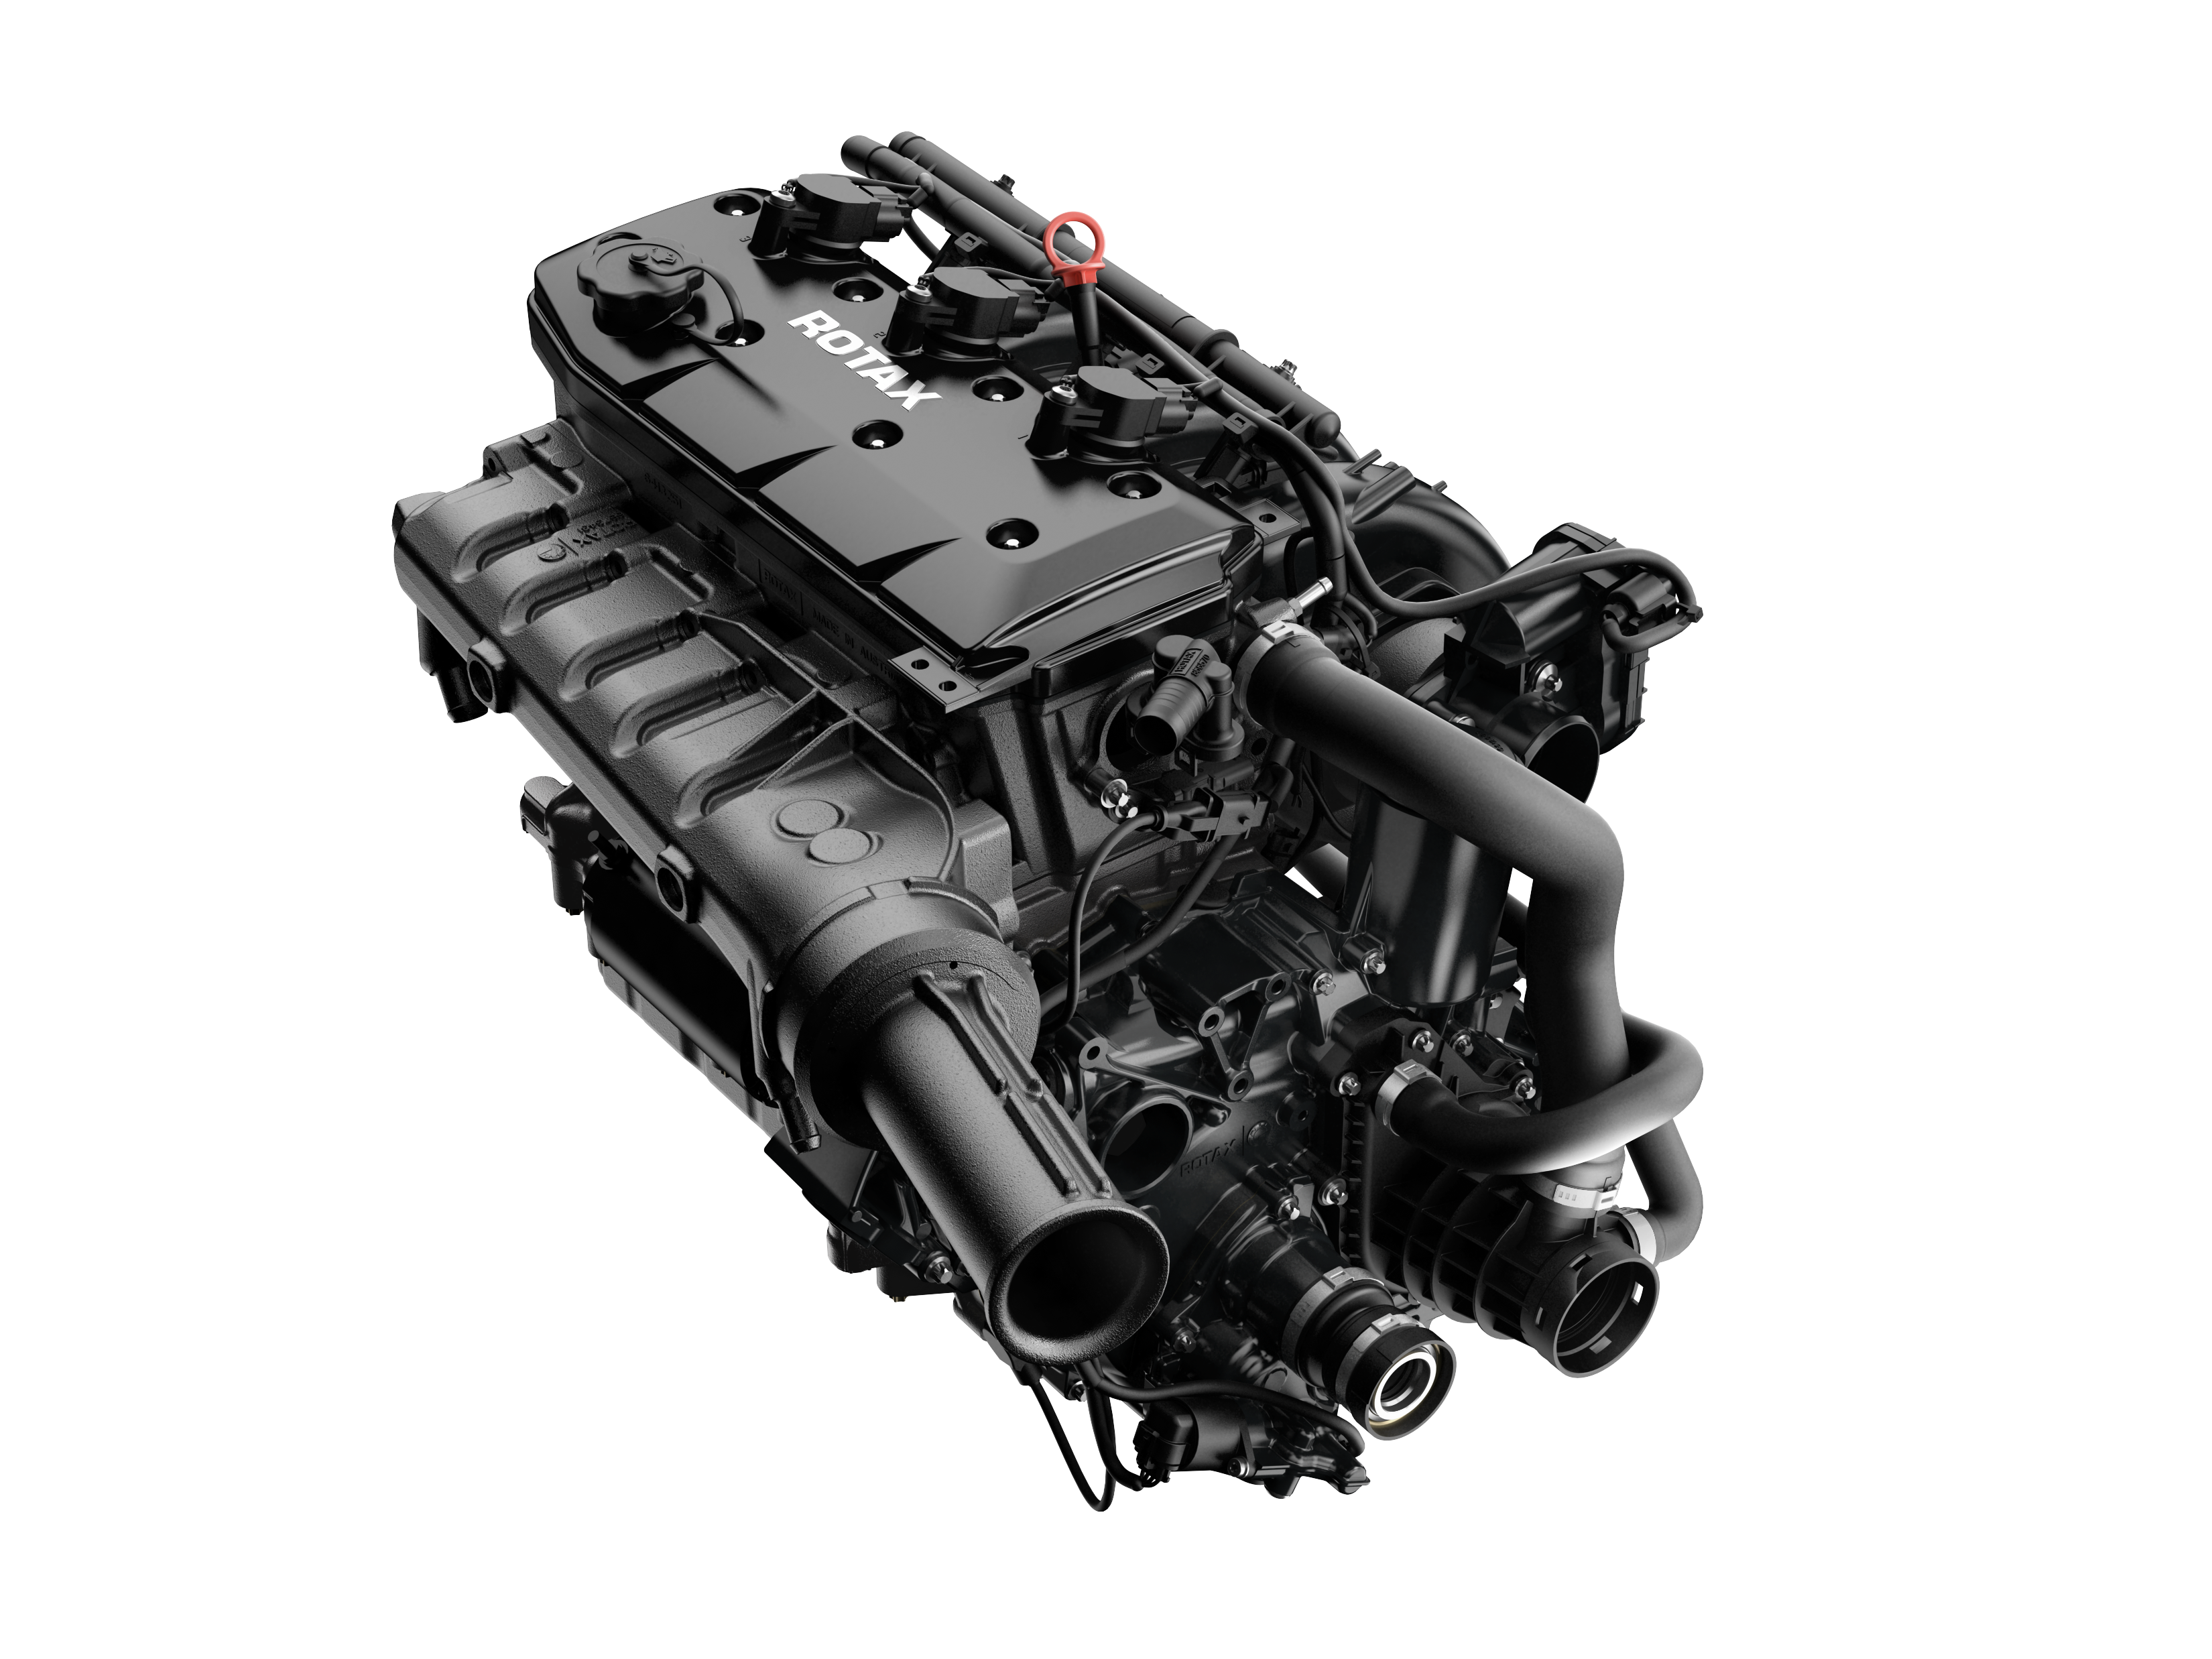 Rotax 1630 motor - 170 hk